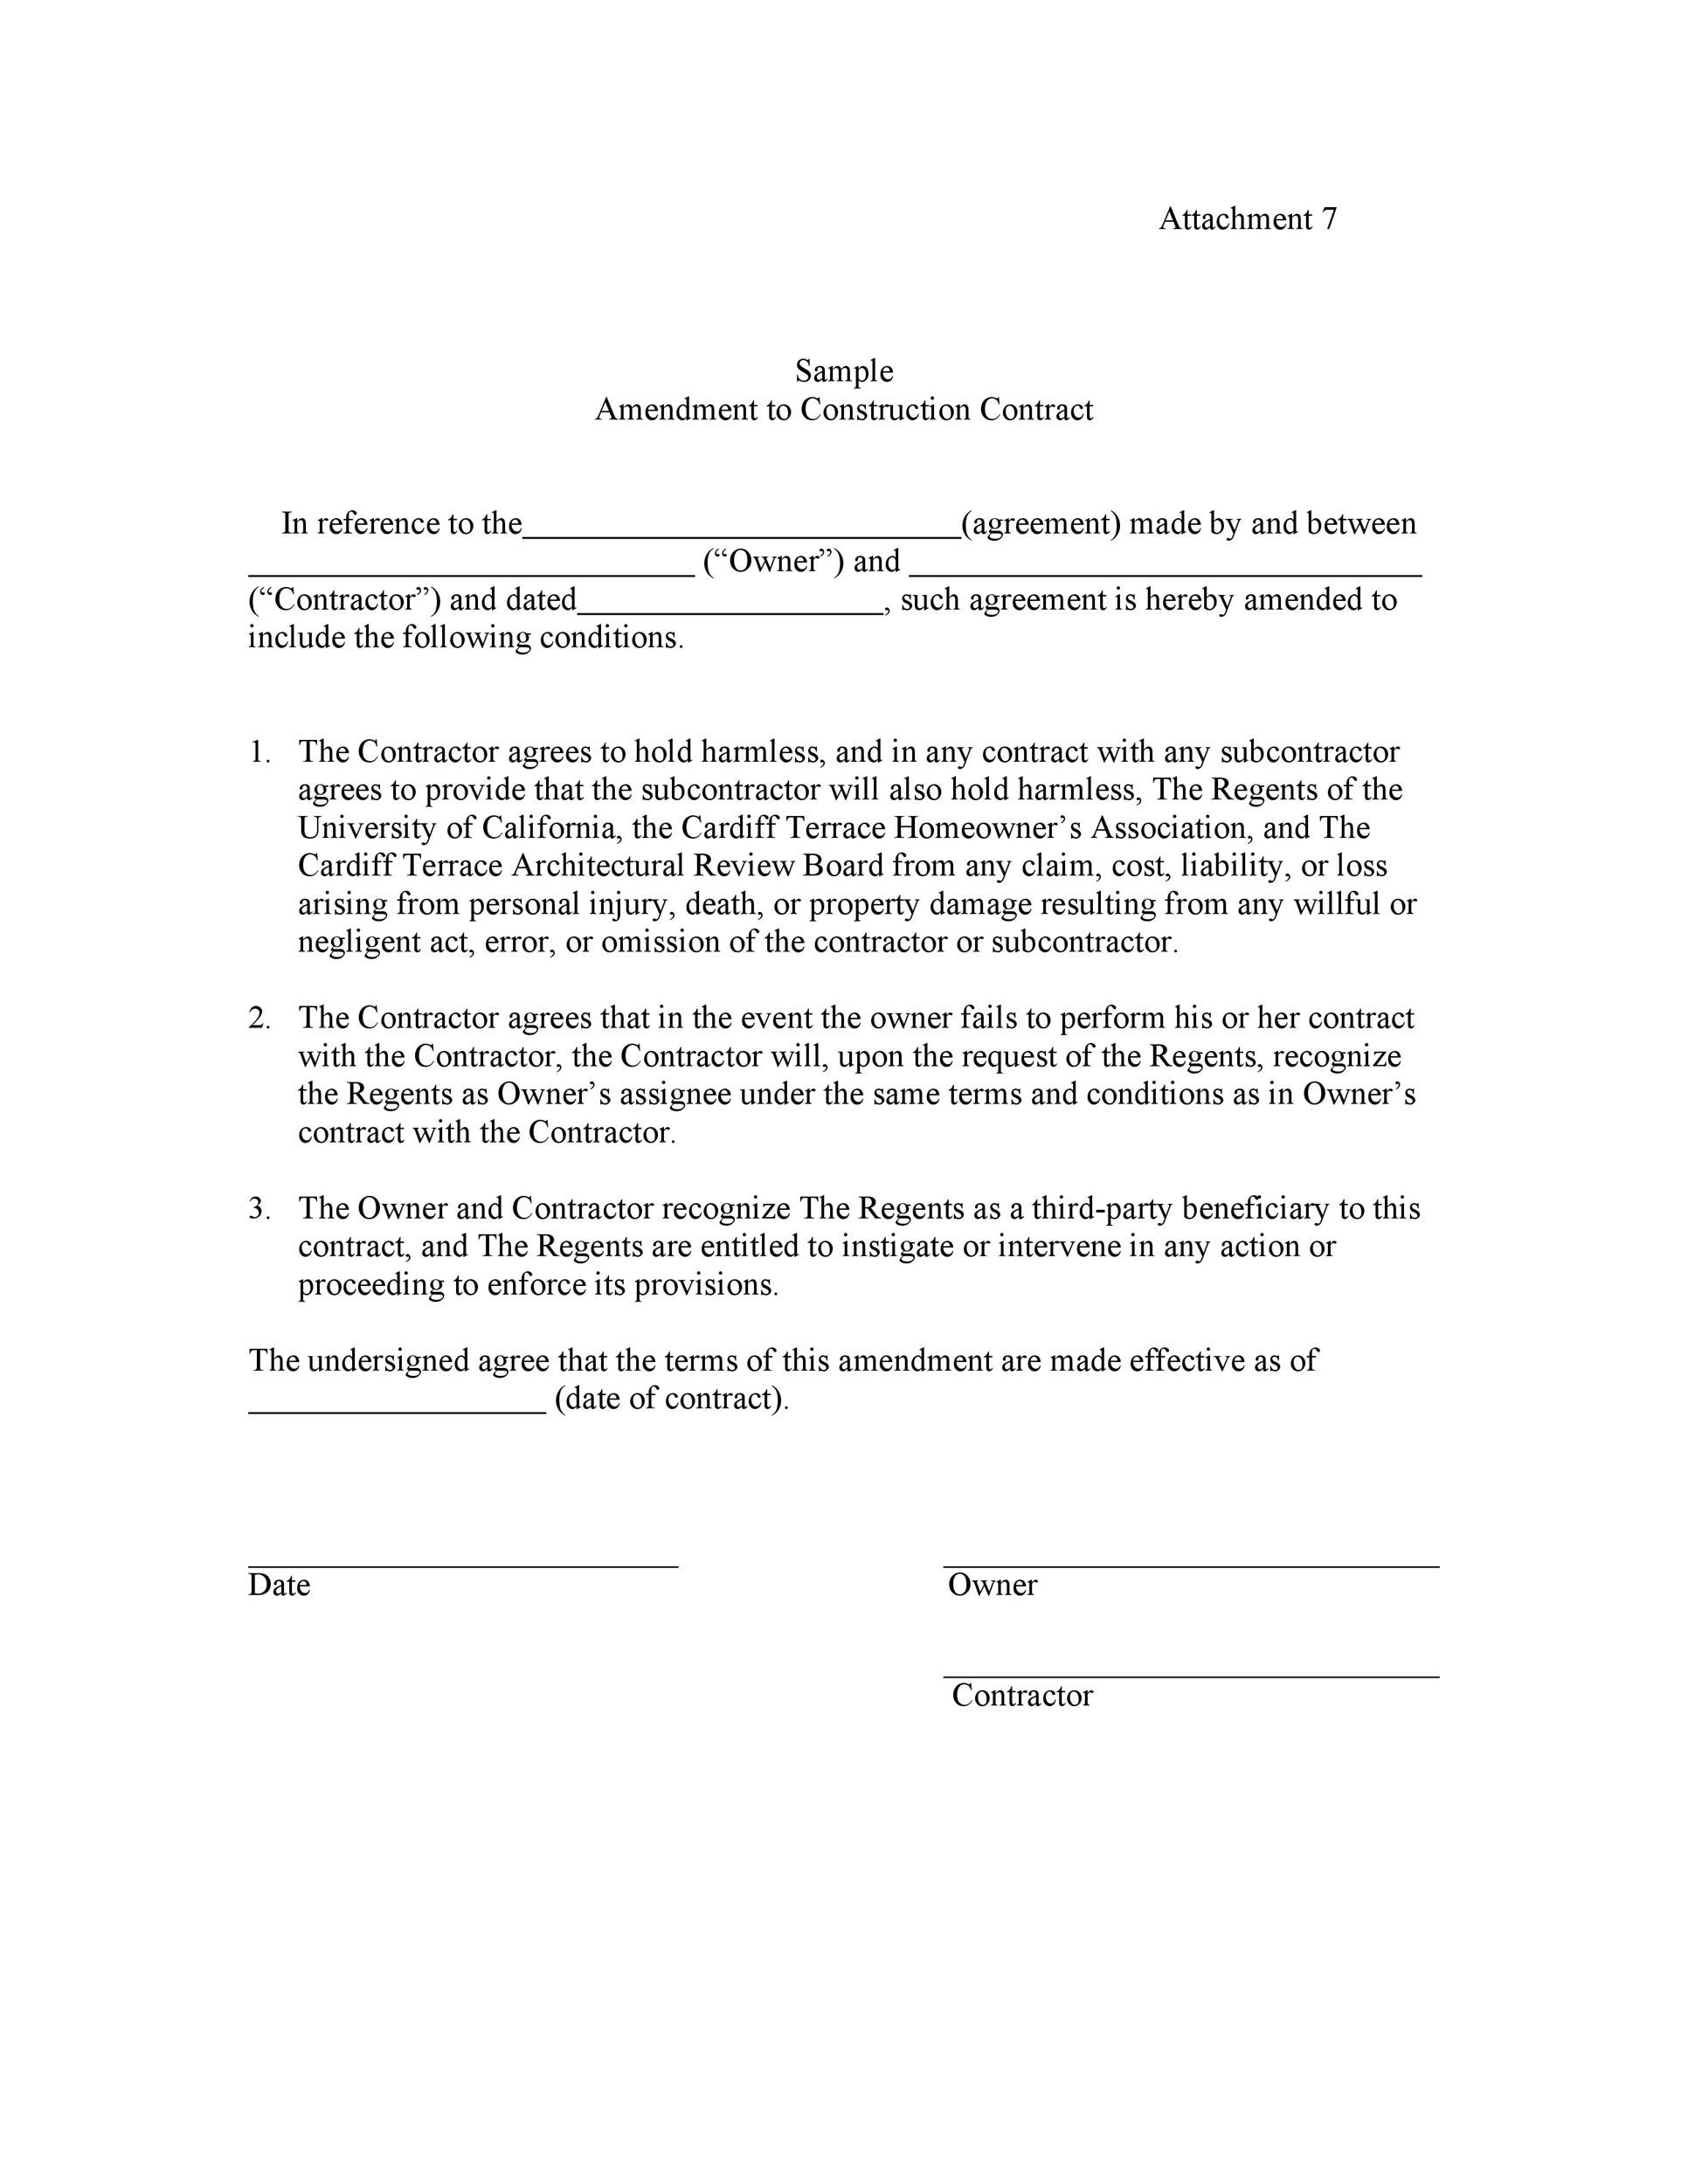 Free contract amendment 11